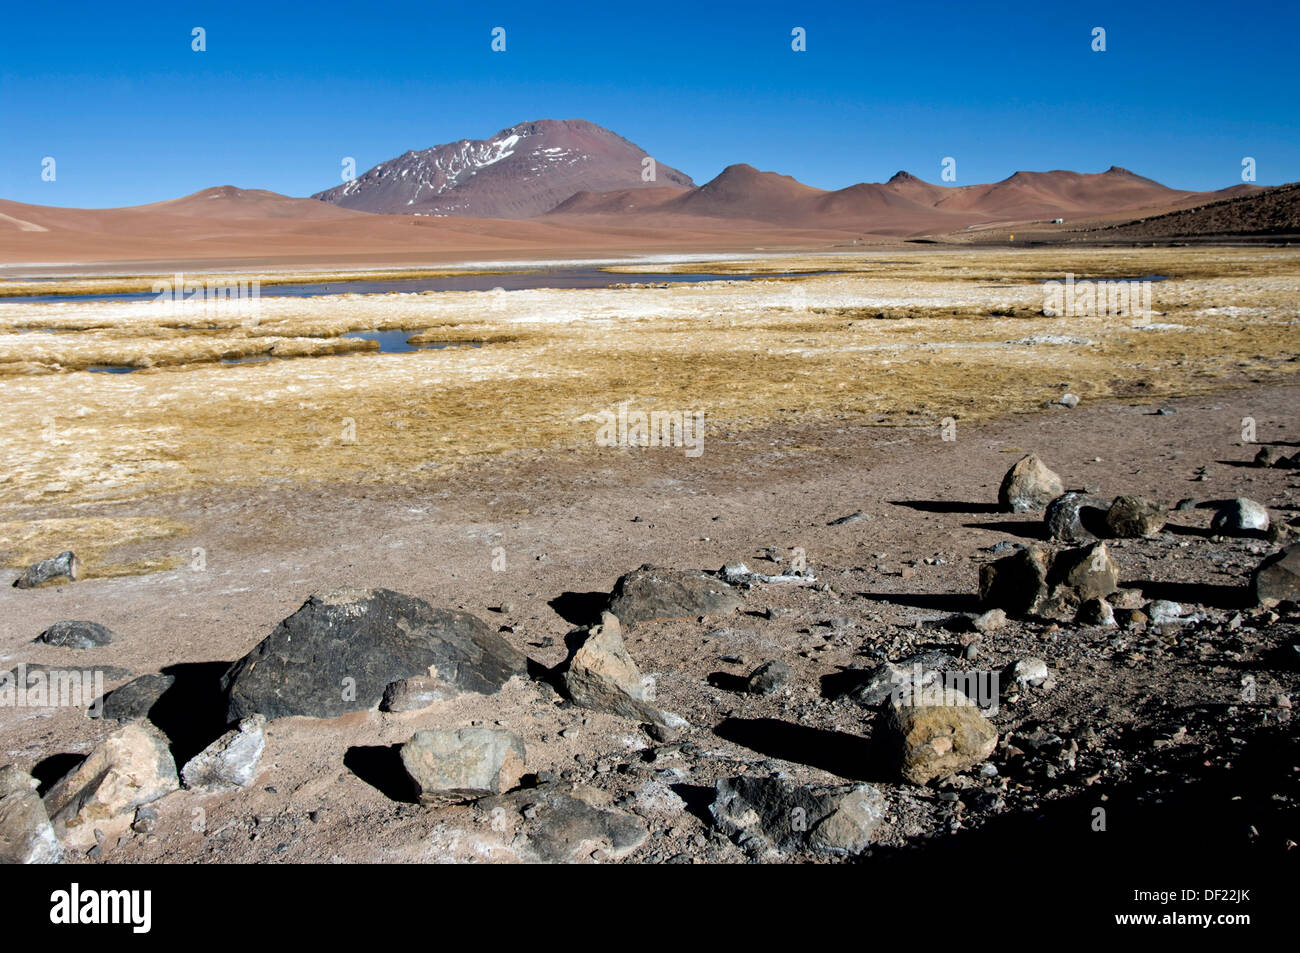 Chile. Atacama desert. Paso de Jama. Stock Photo